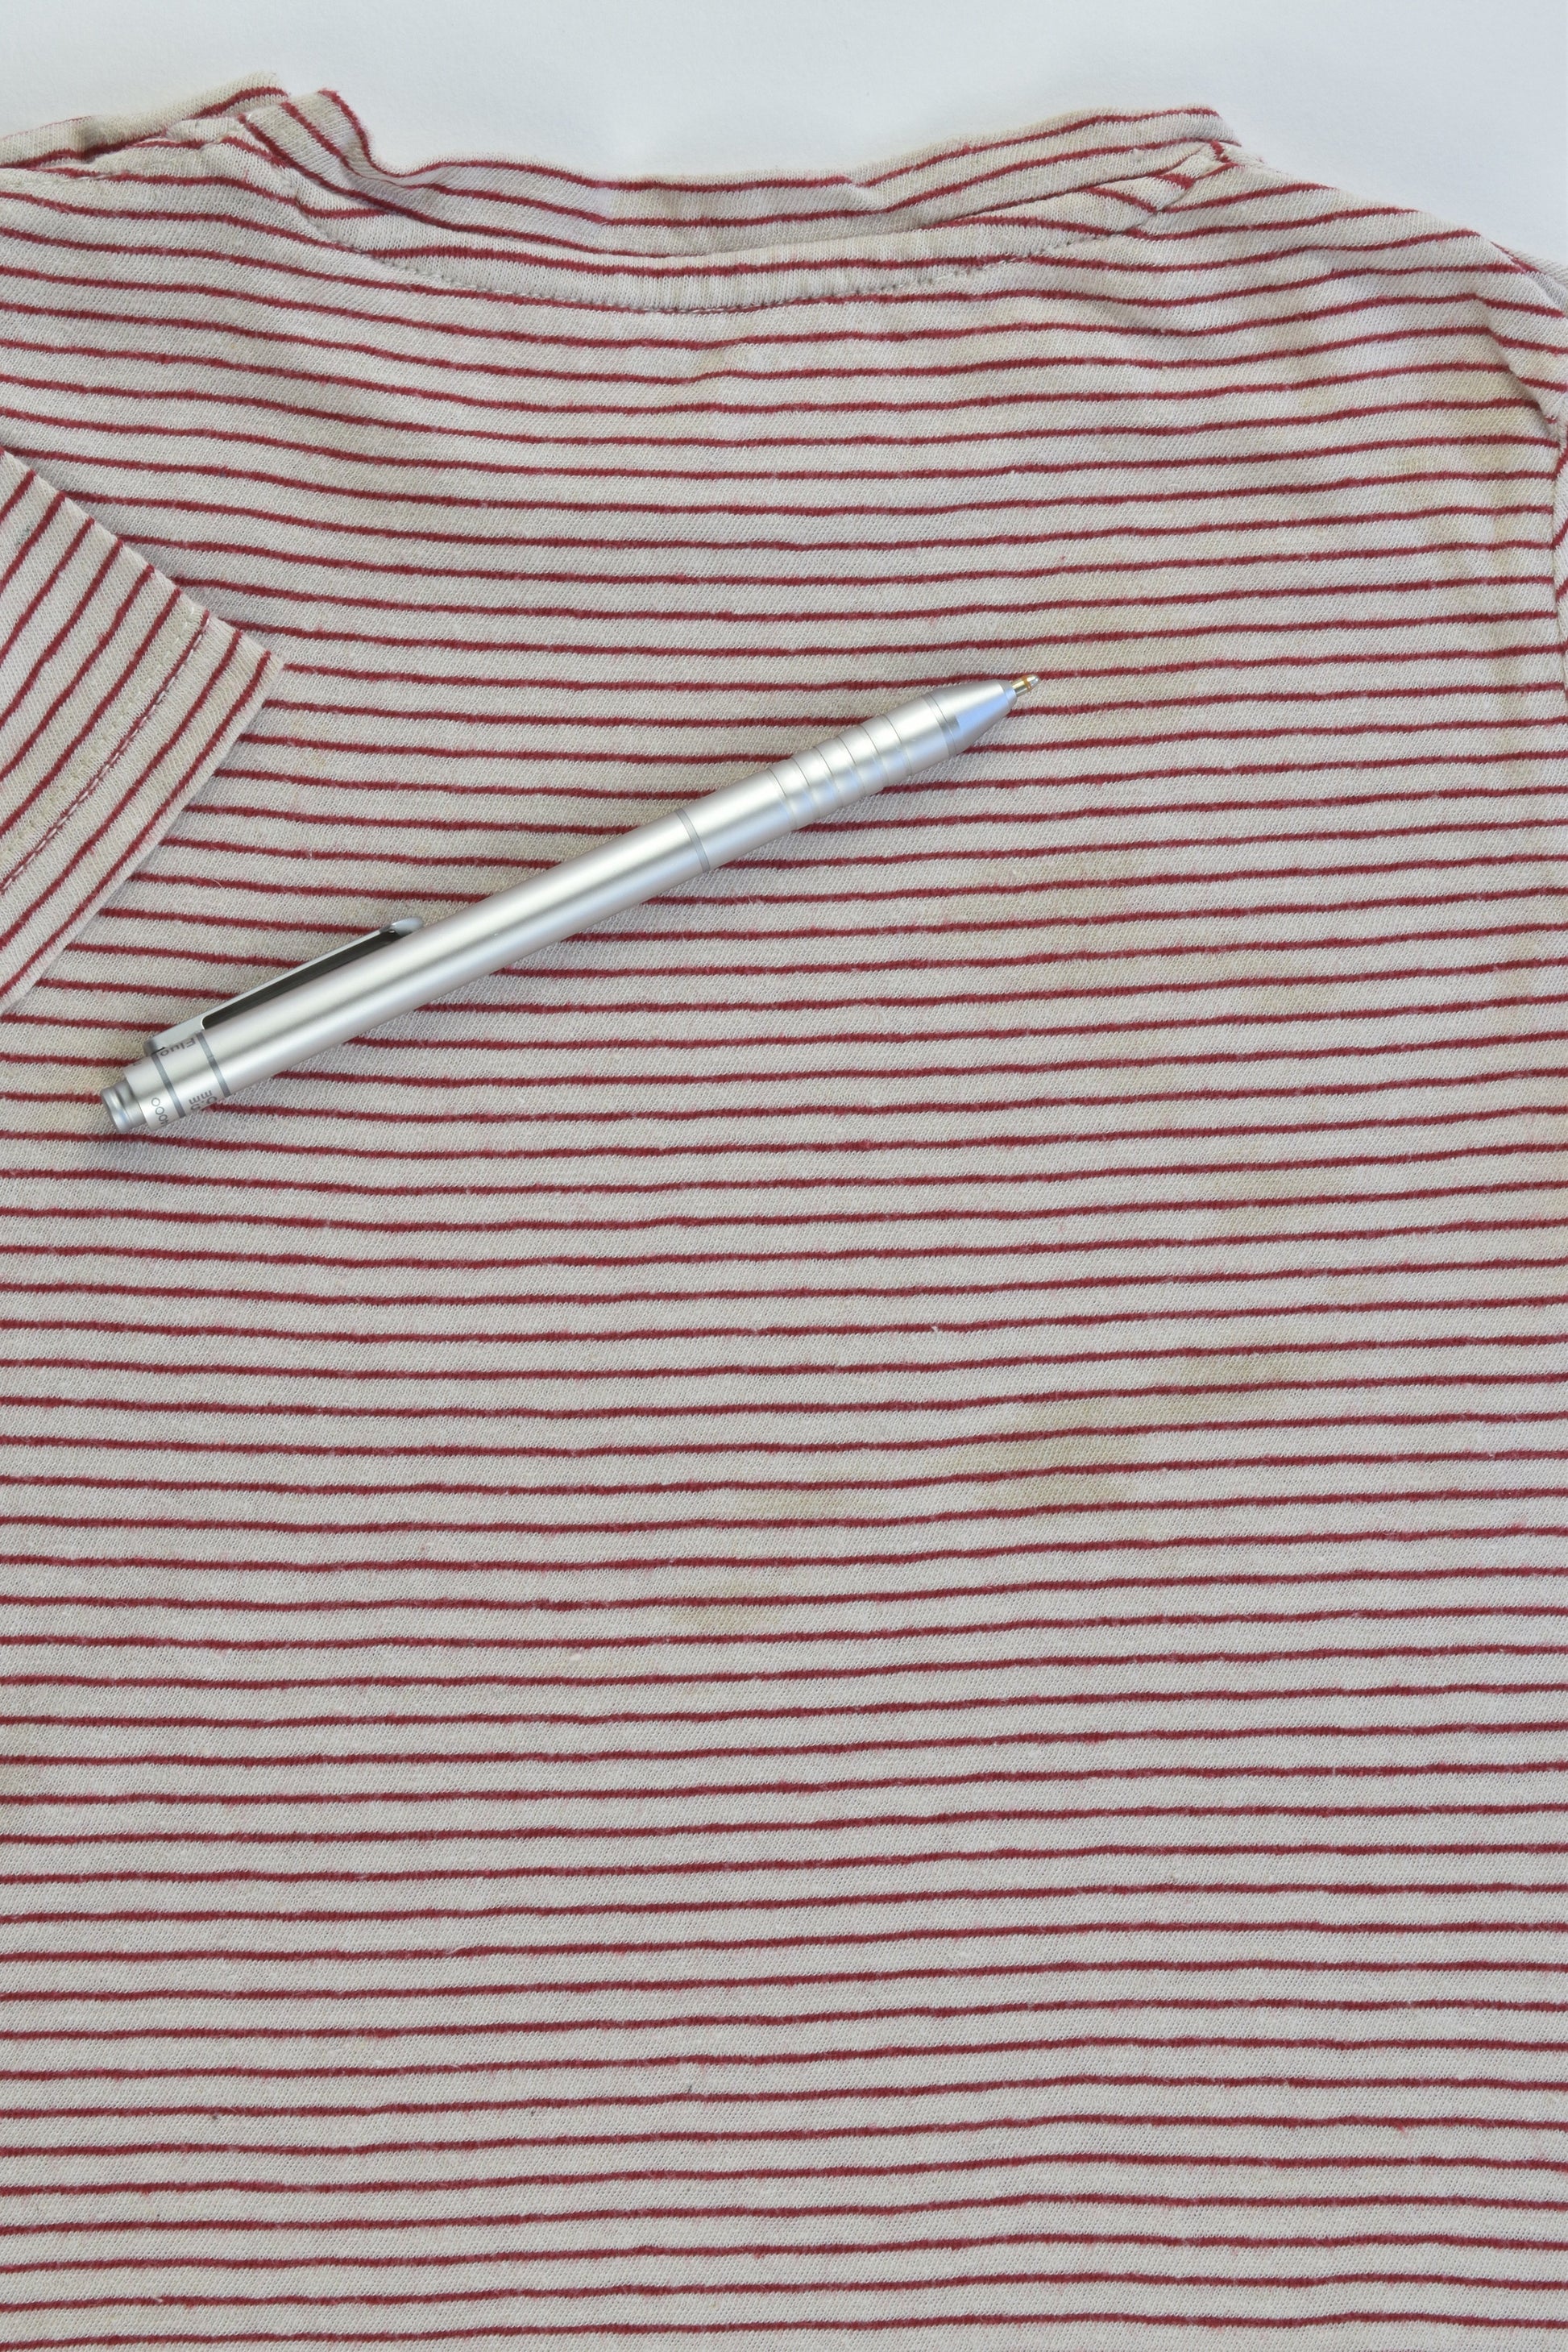 Bout'Chou (France) Size 1 (18 months) Cotton/Linen Nautical Striped T-shirt